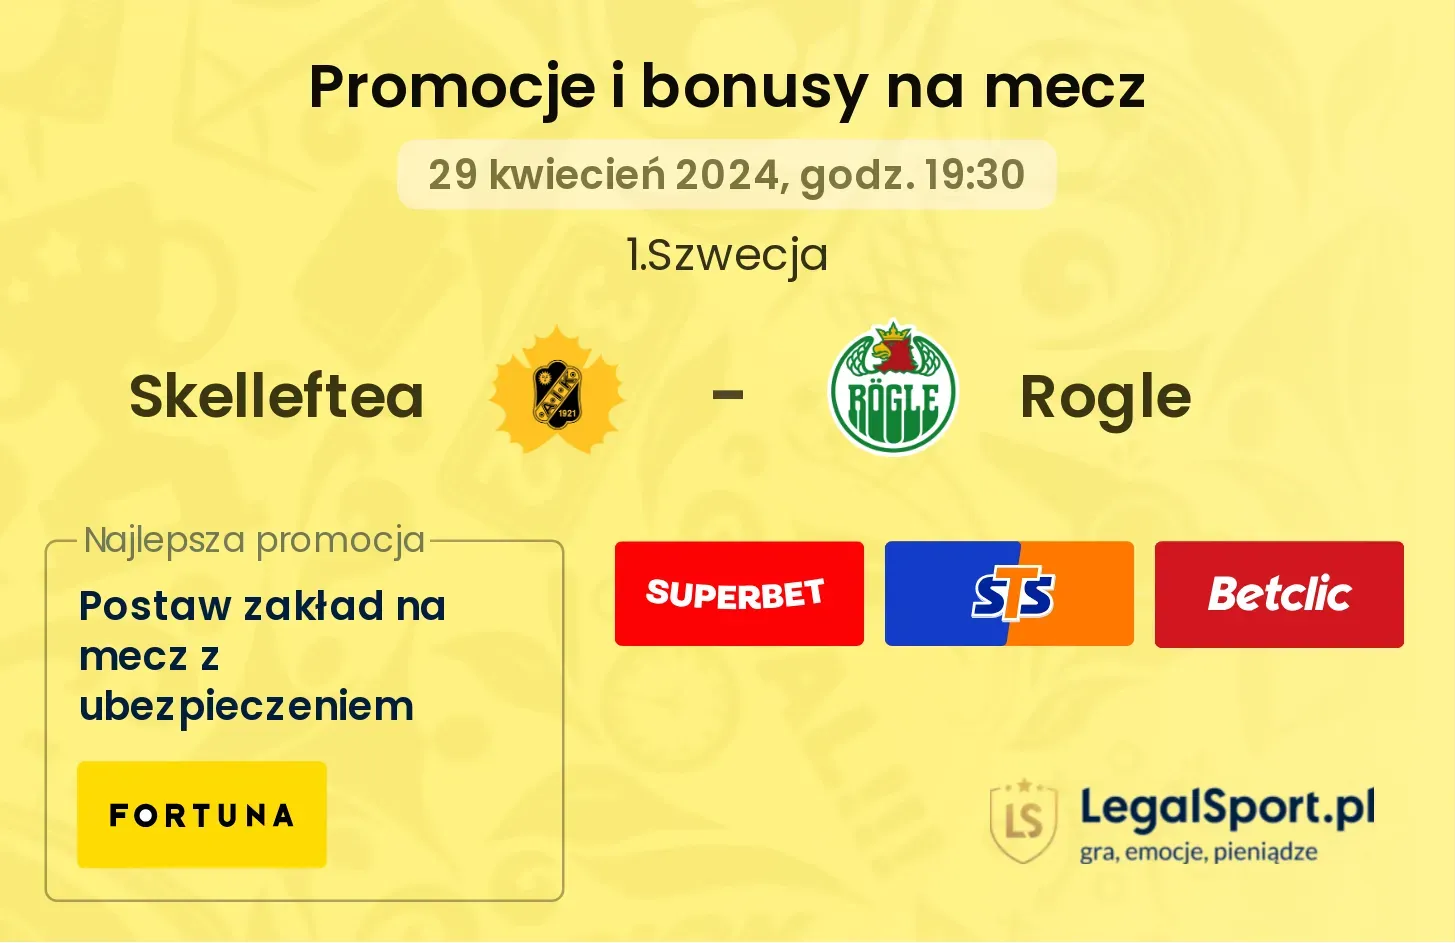 Skelleftea - Rogle promocje bonusy na mecz